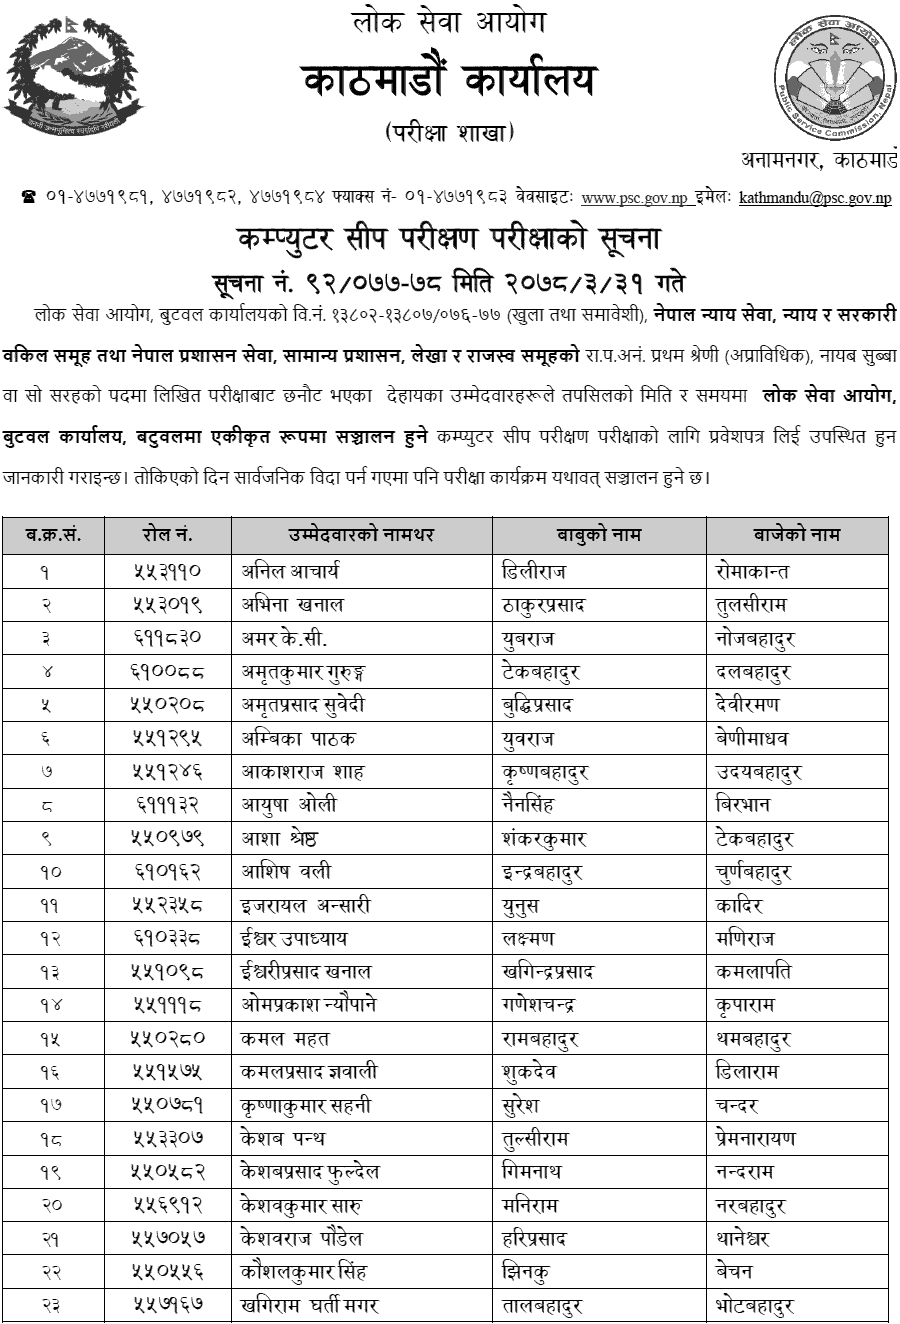 Lok Sewa Aayog Butwal Nayab Subba Written Exam Result and Skill Test Schedule